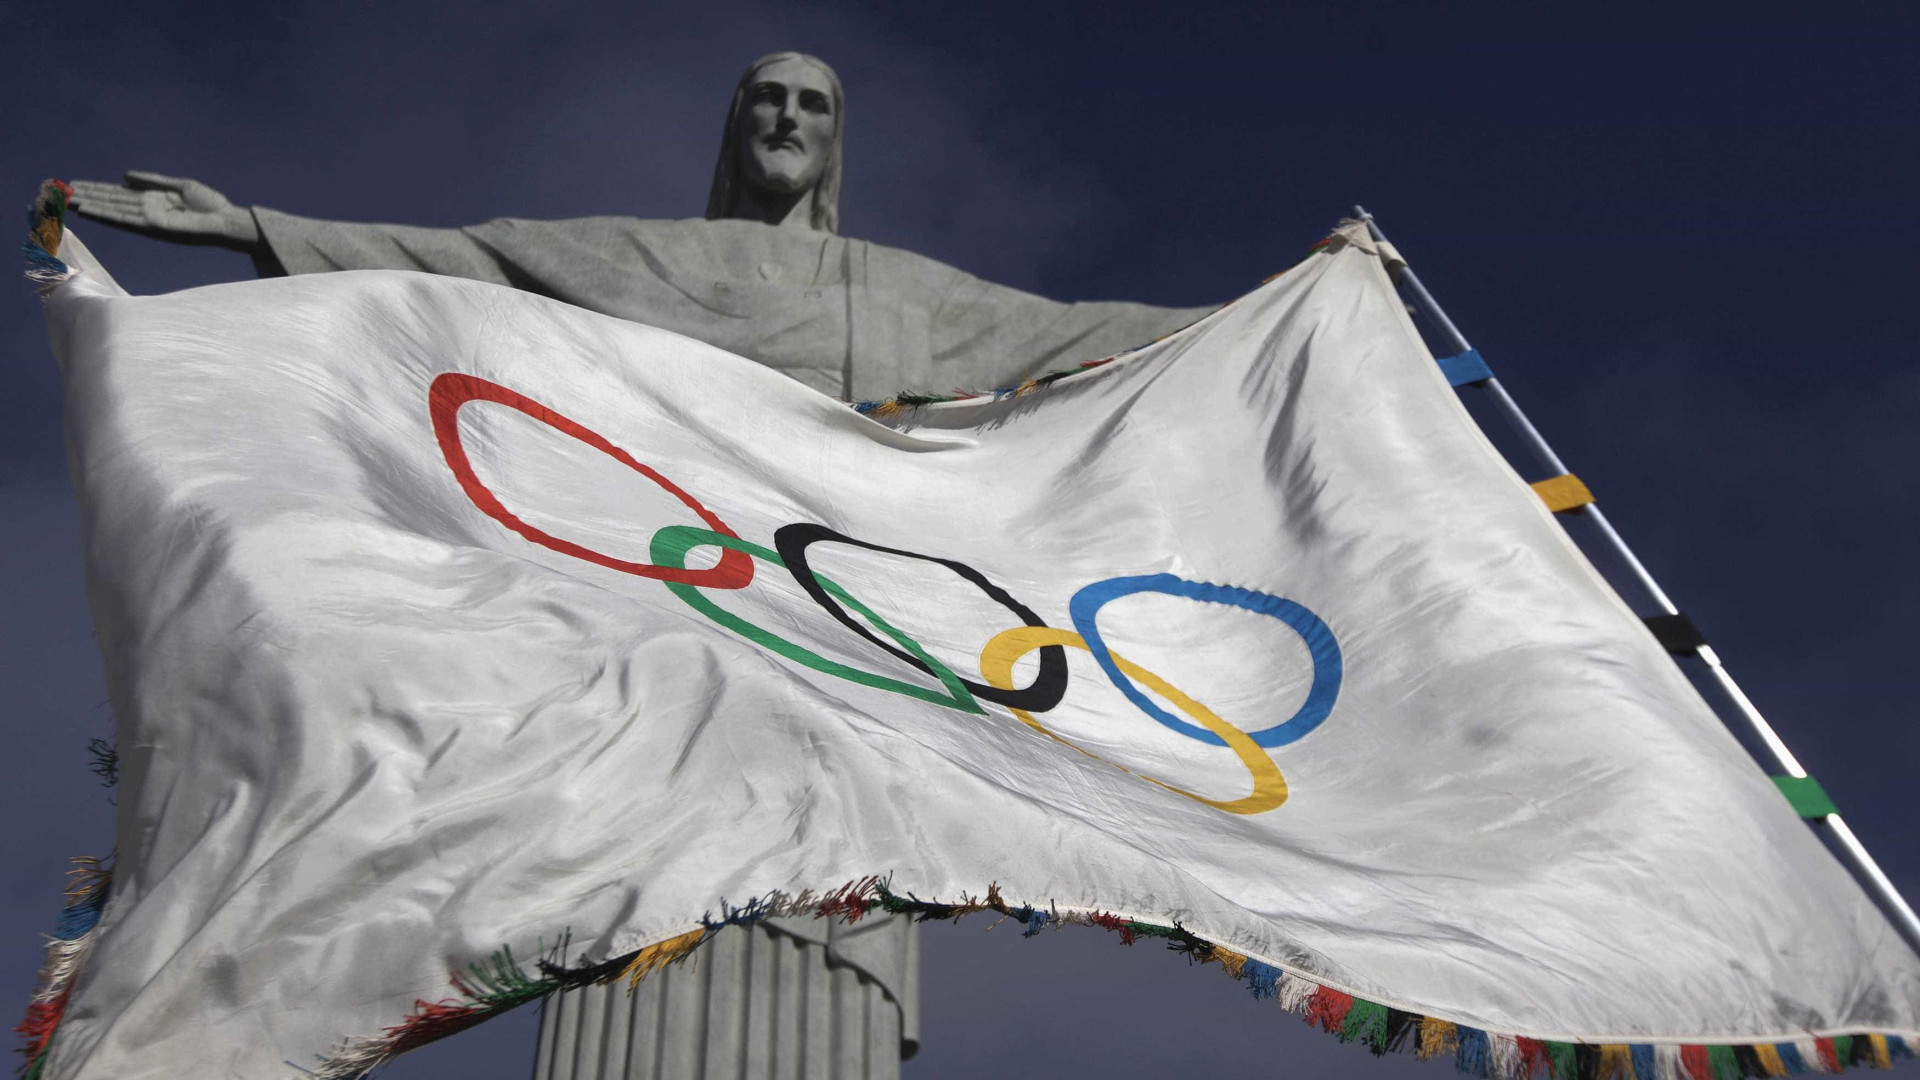 Tocha passará por 300 cidades até chegar ao Rio de Janeiro